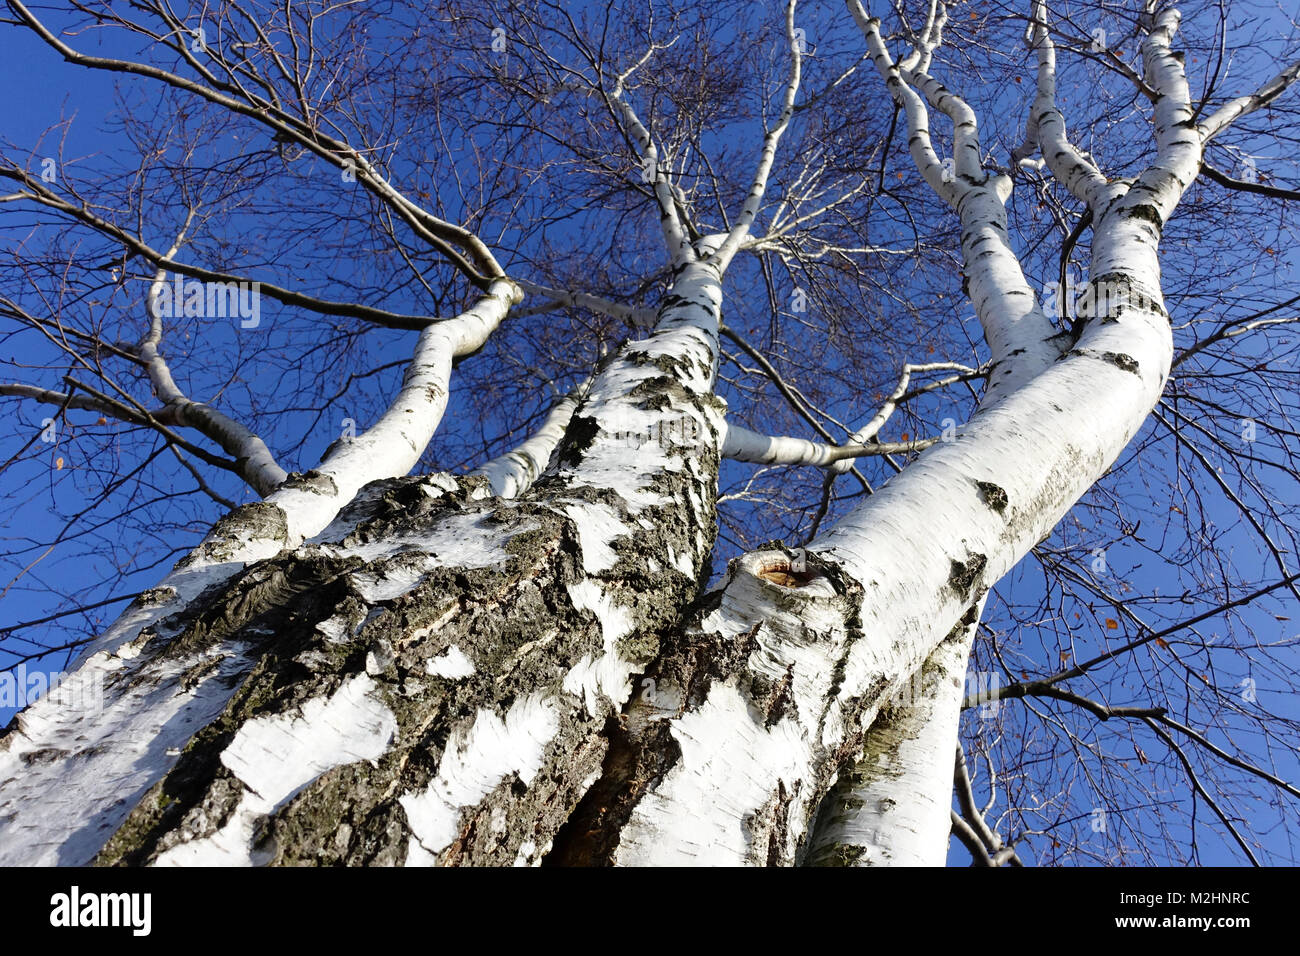 Betula pendula, silver birch trees Winter White birch trunks Stock Photo